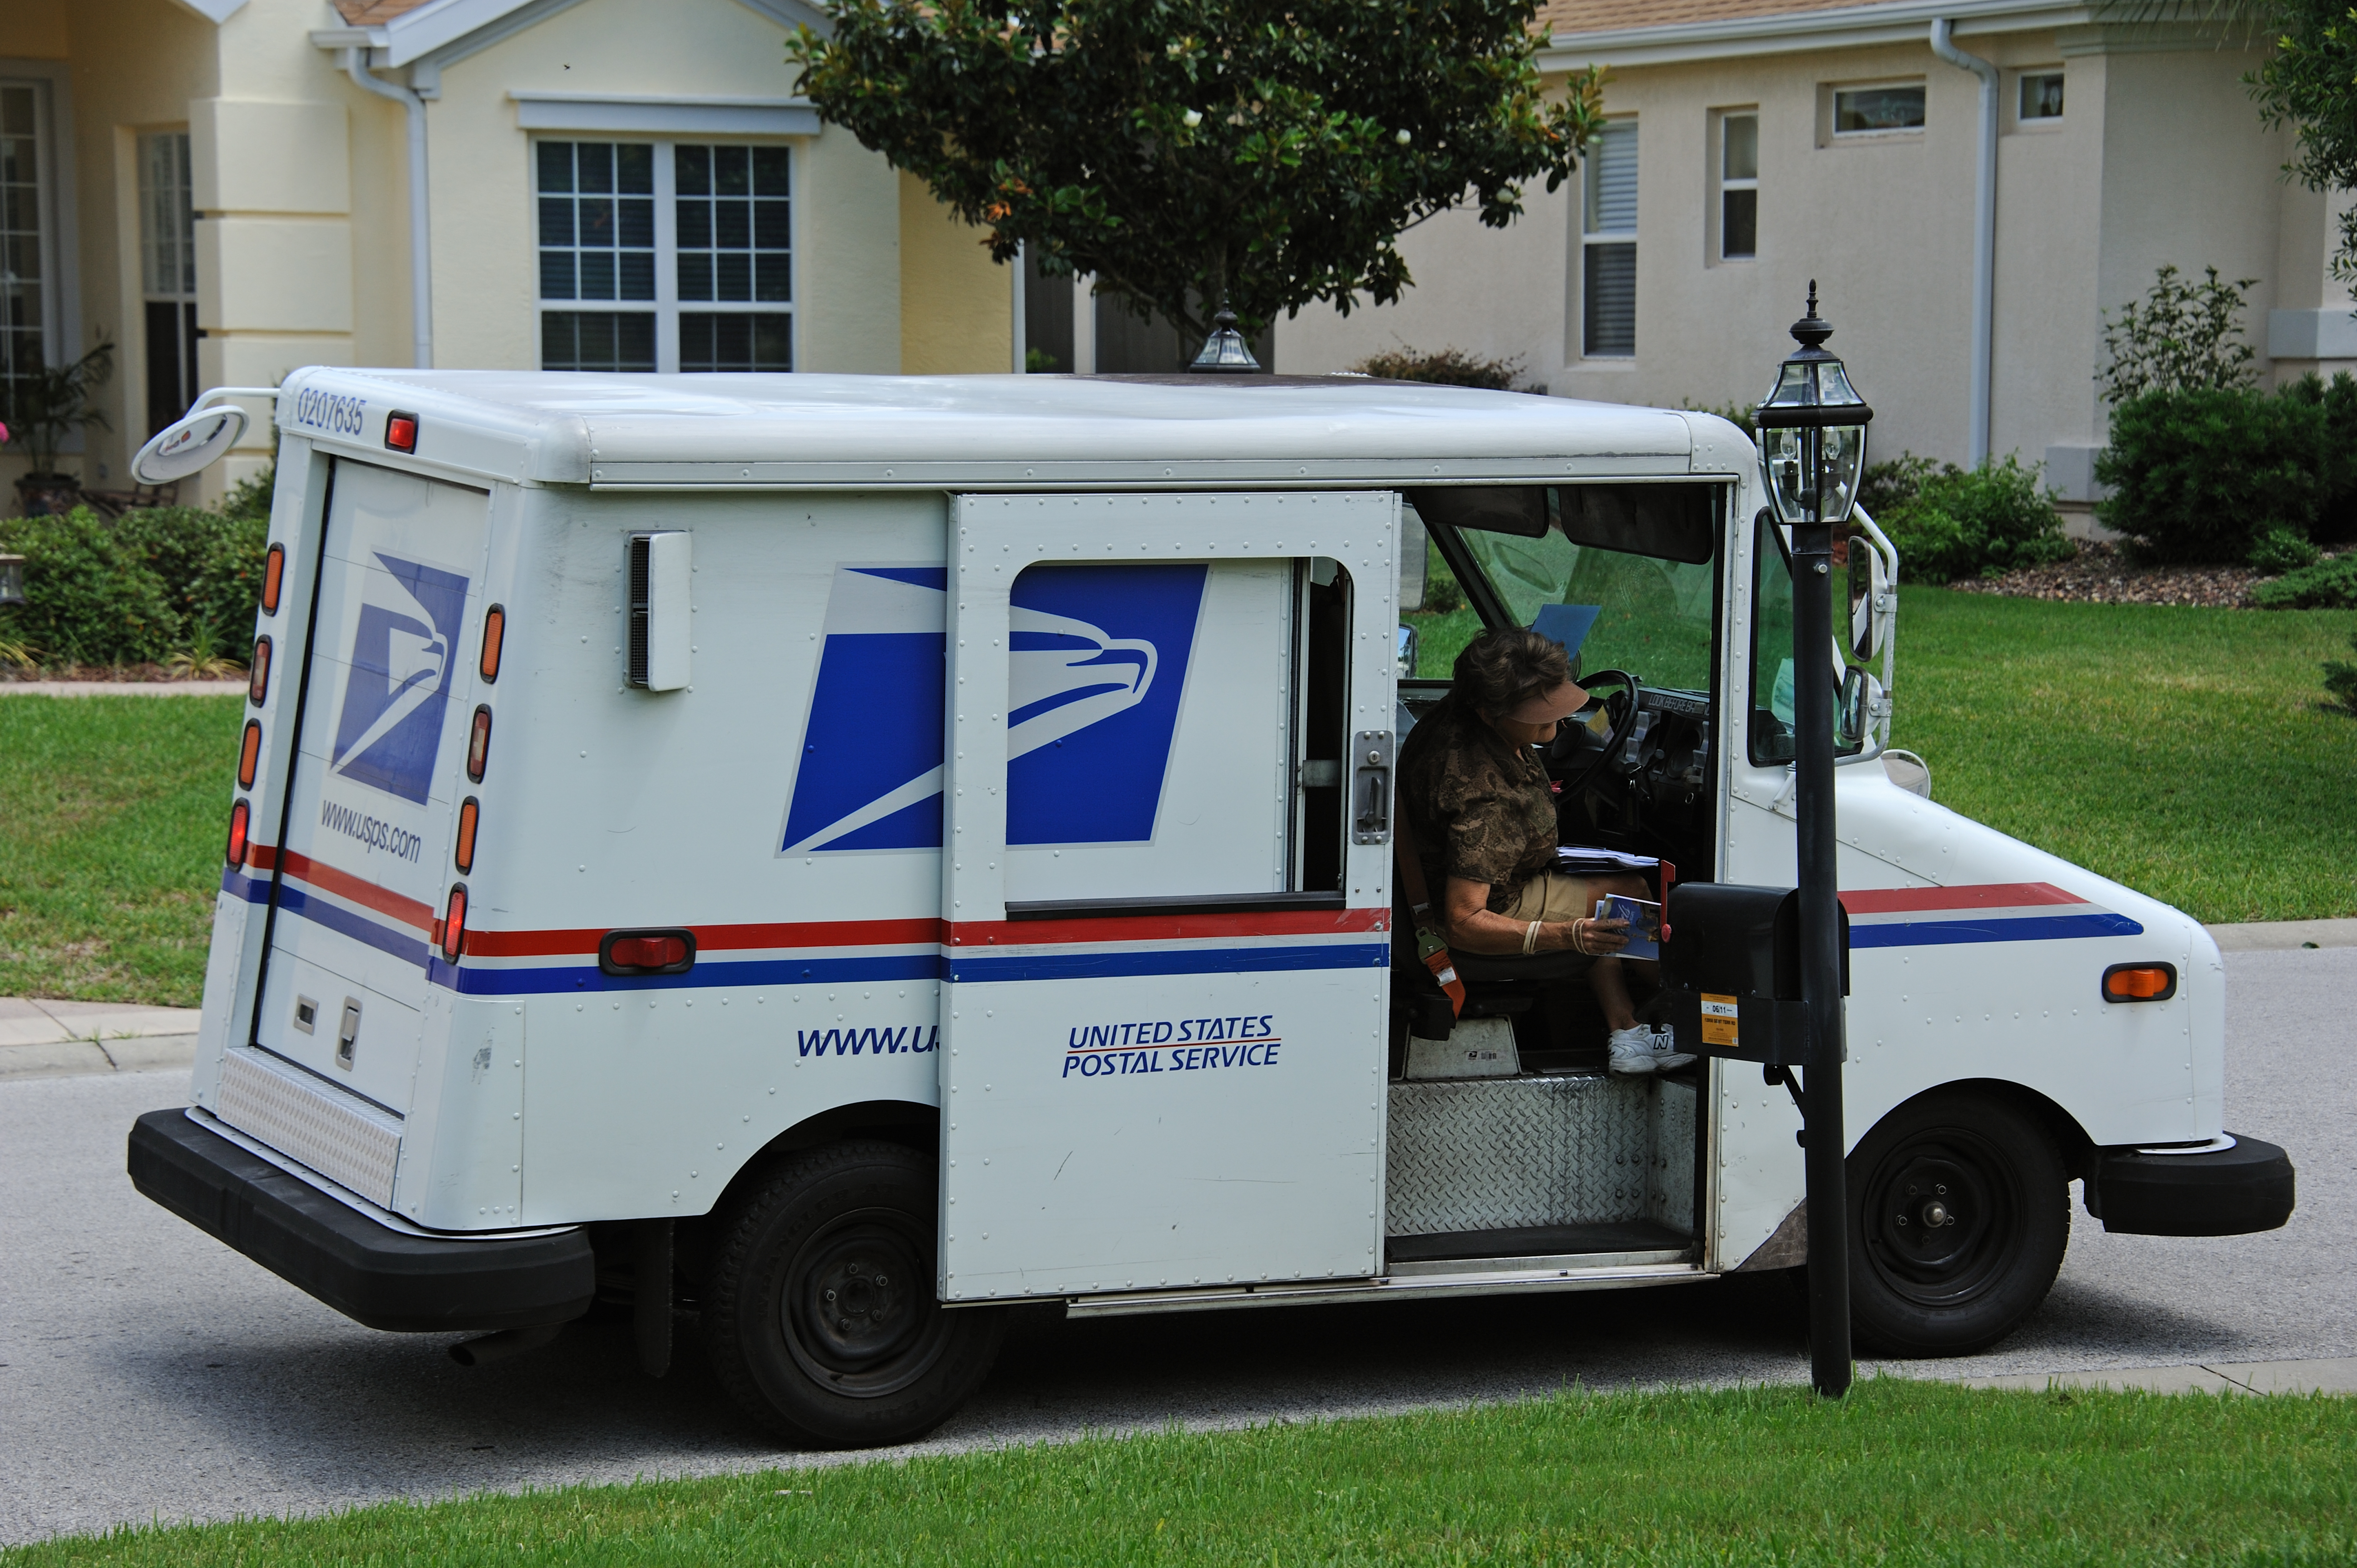 give up postal service